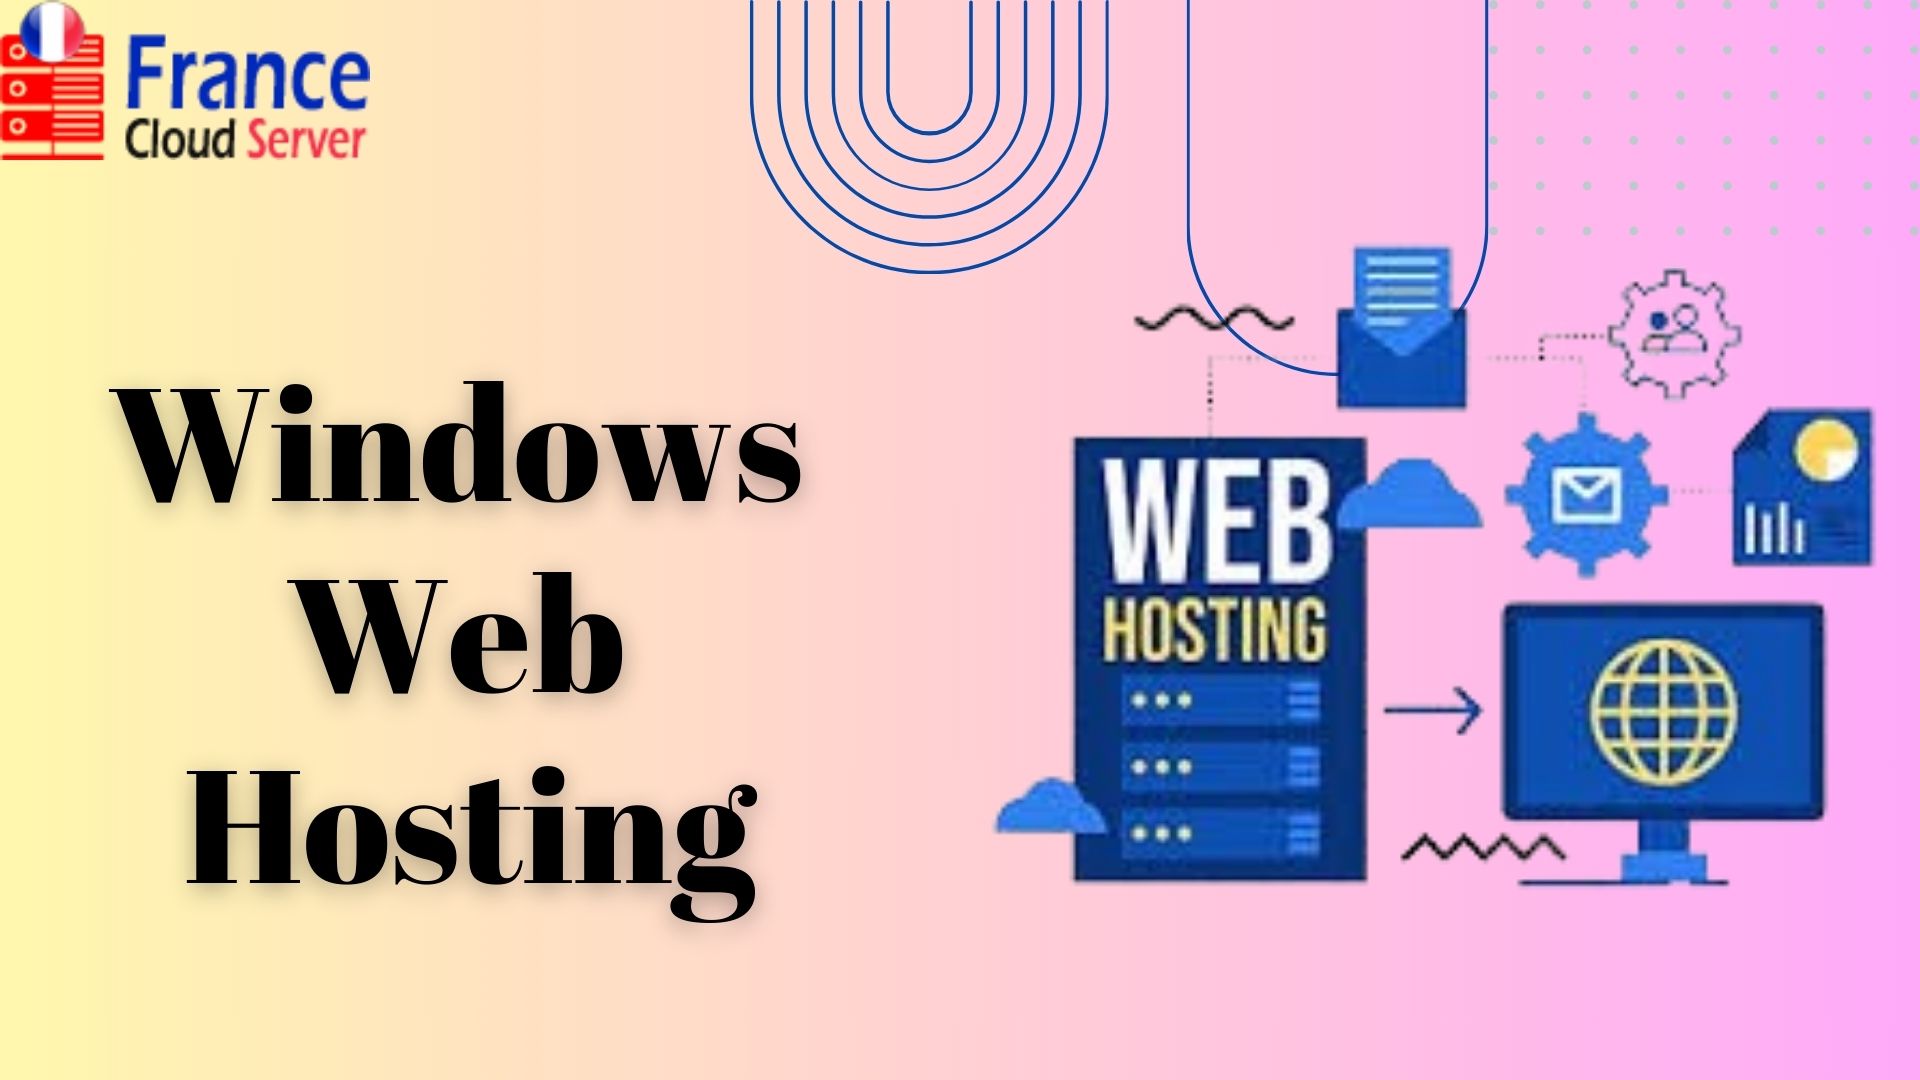 Windows Web Hosting